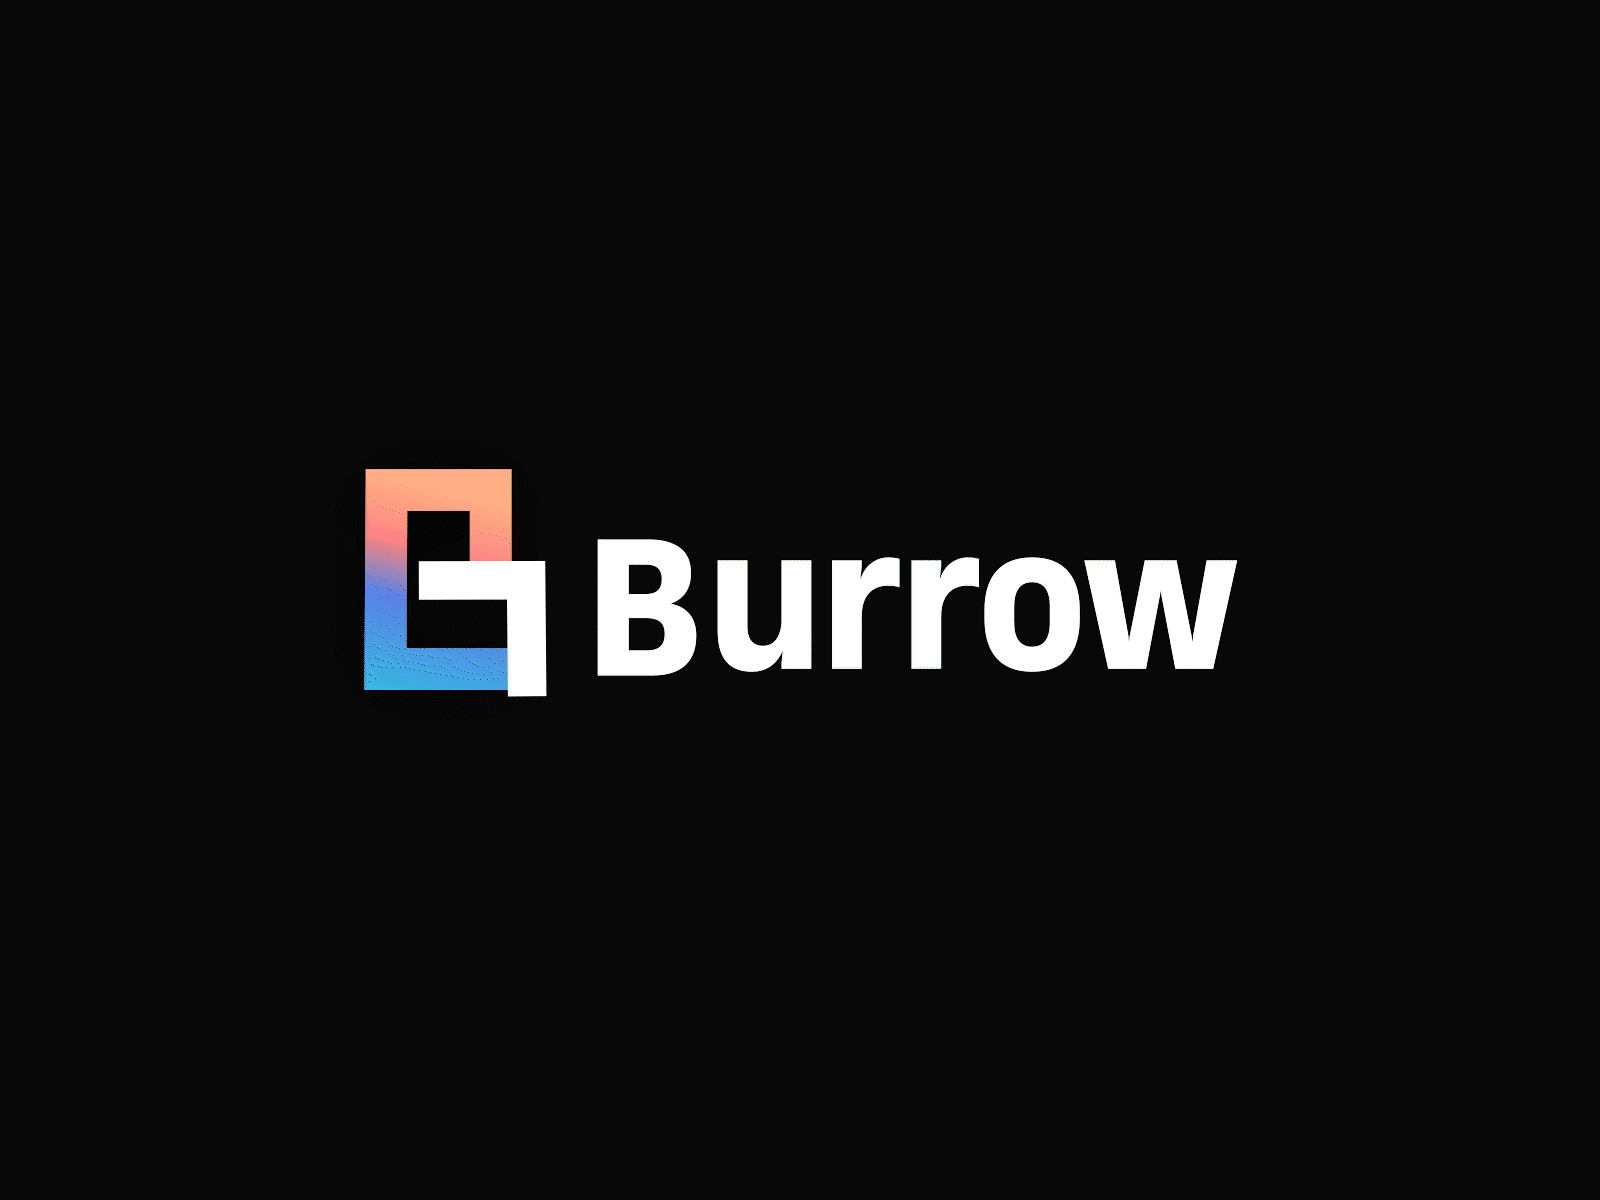 Burrow logo animation